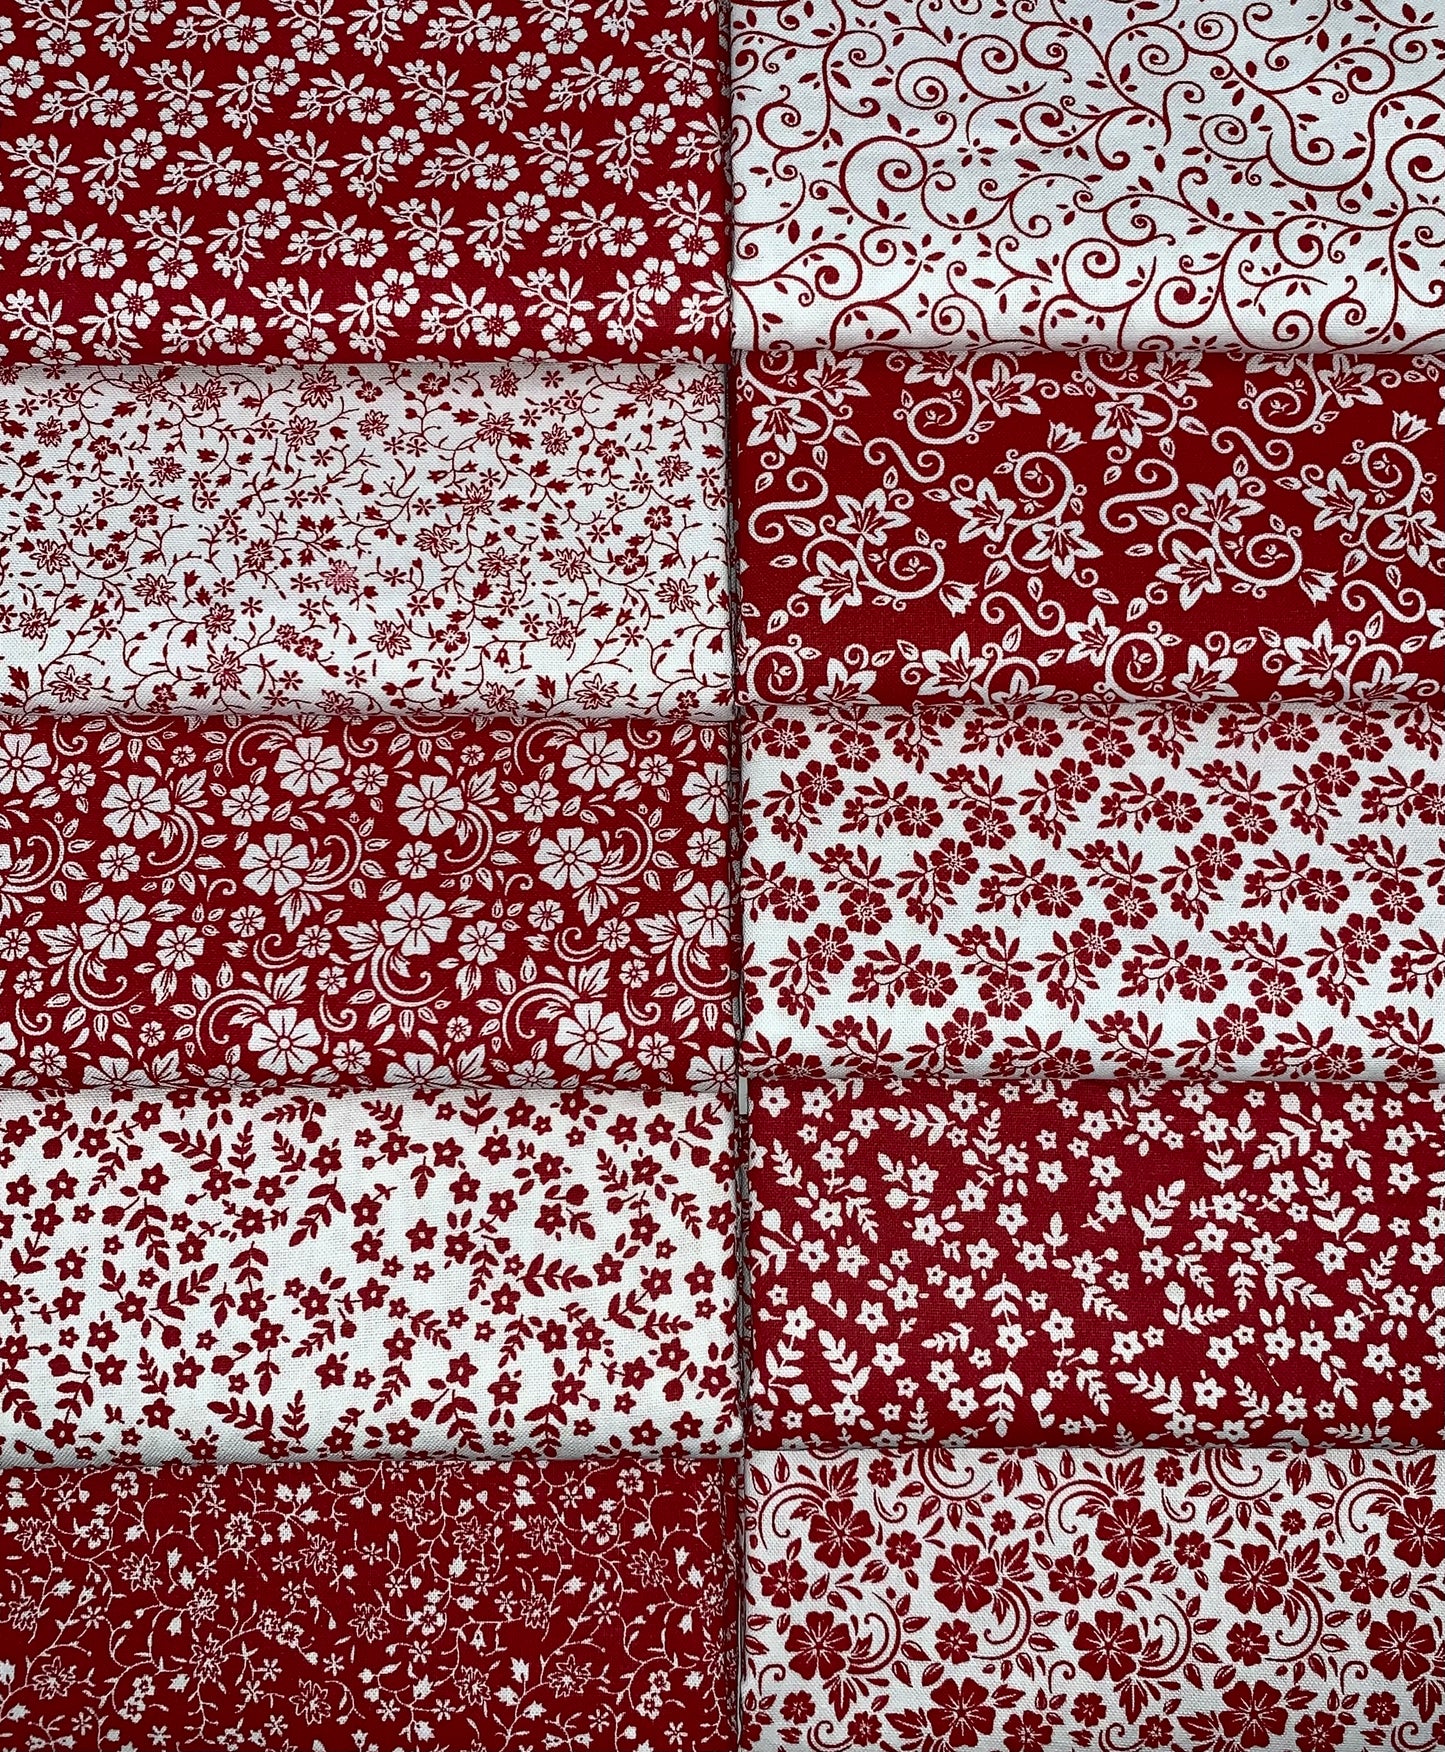 Fire & Ice (Red & White Prints) Half-yard Bundle - 10 Fabrics, 5 Total Yards